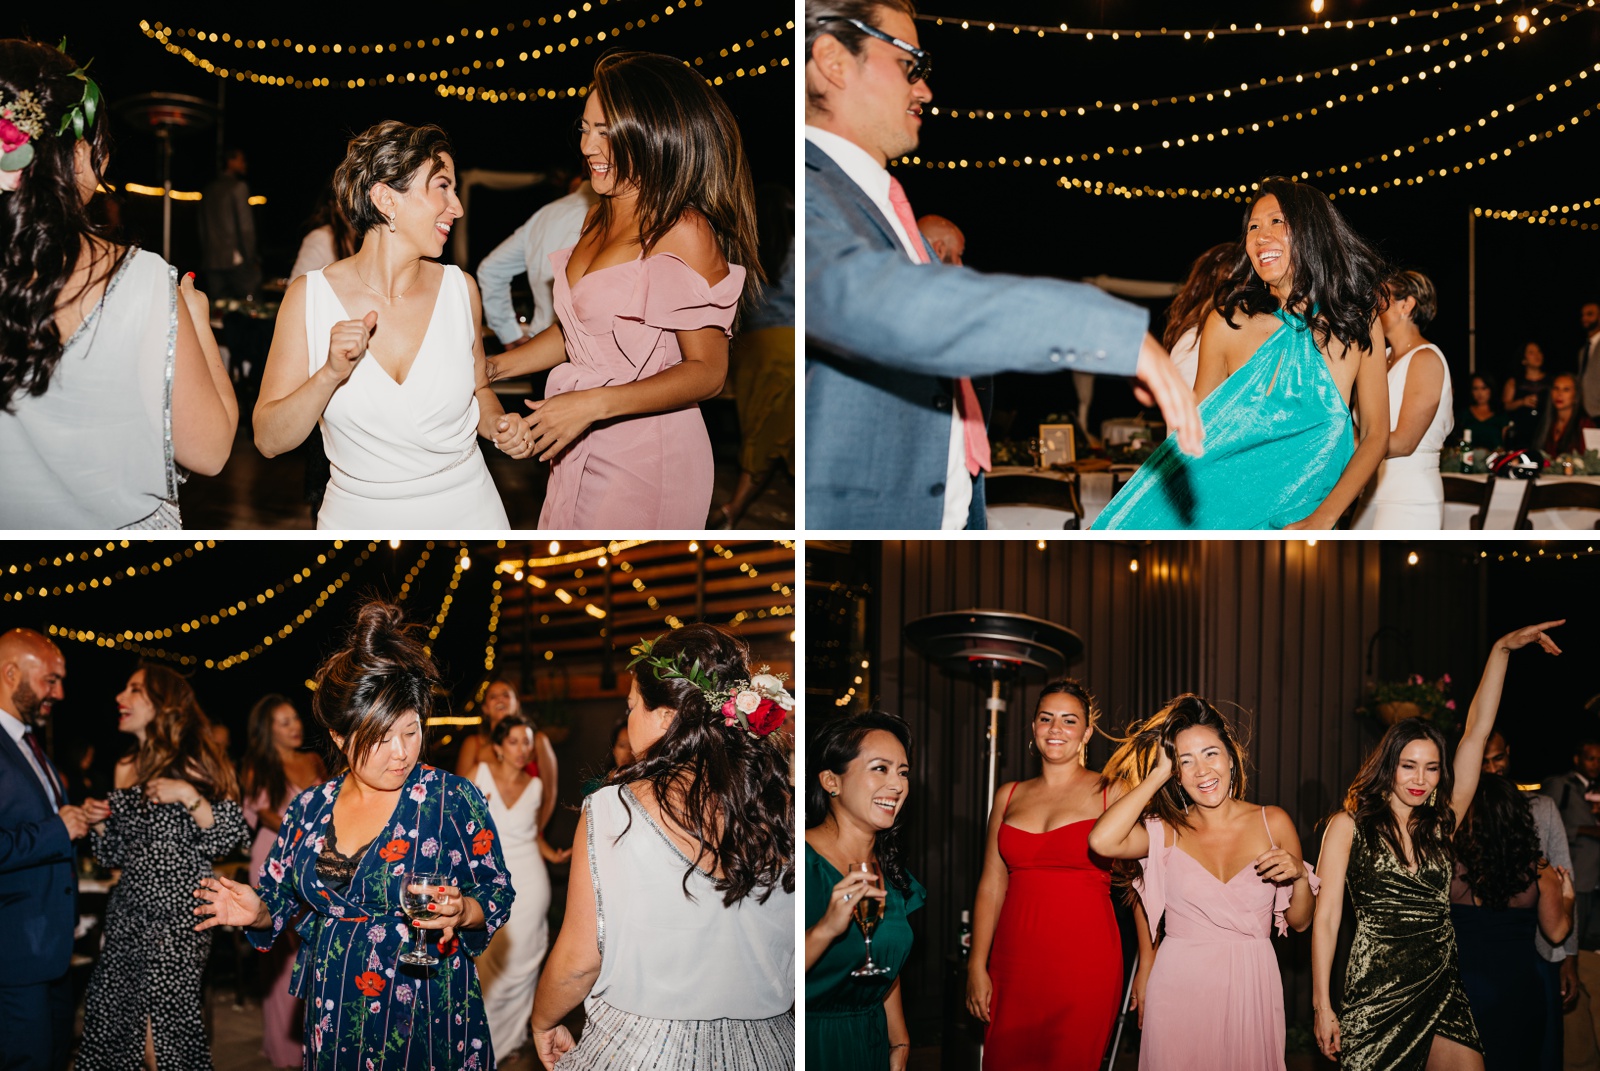 Wedding guest dancing photos